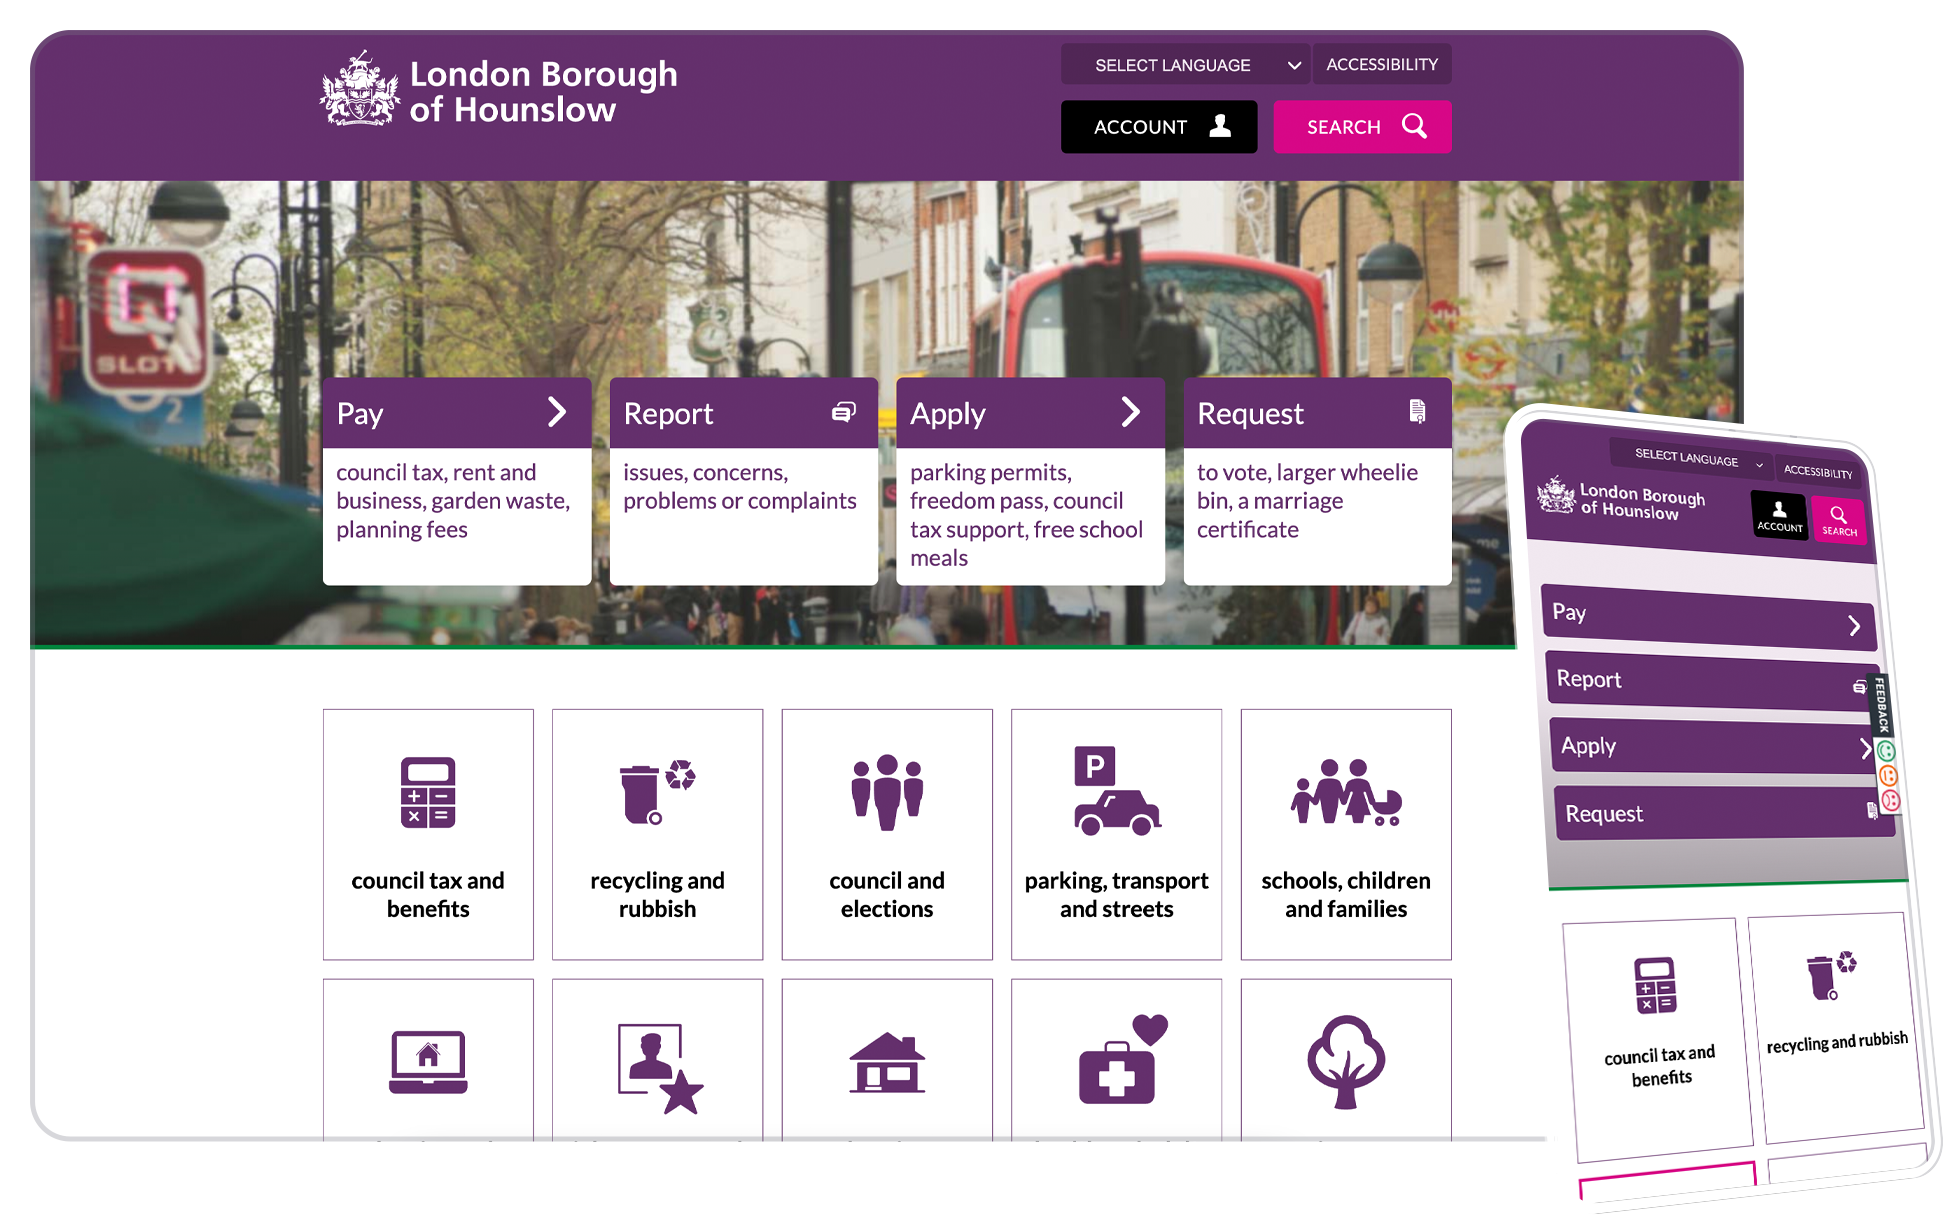 London Borough of Hounslow's homepage